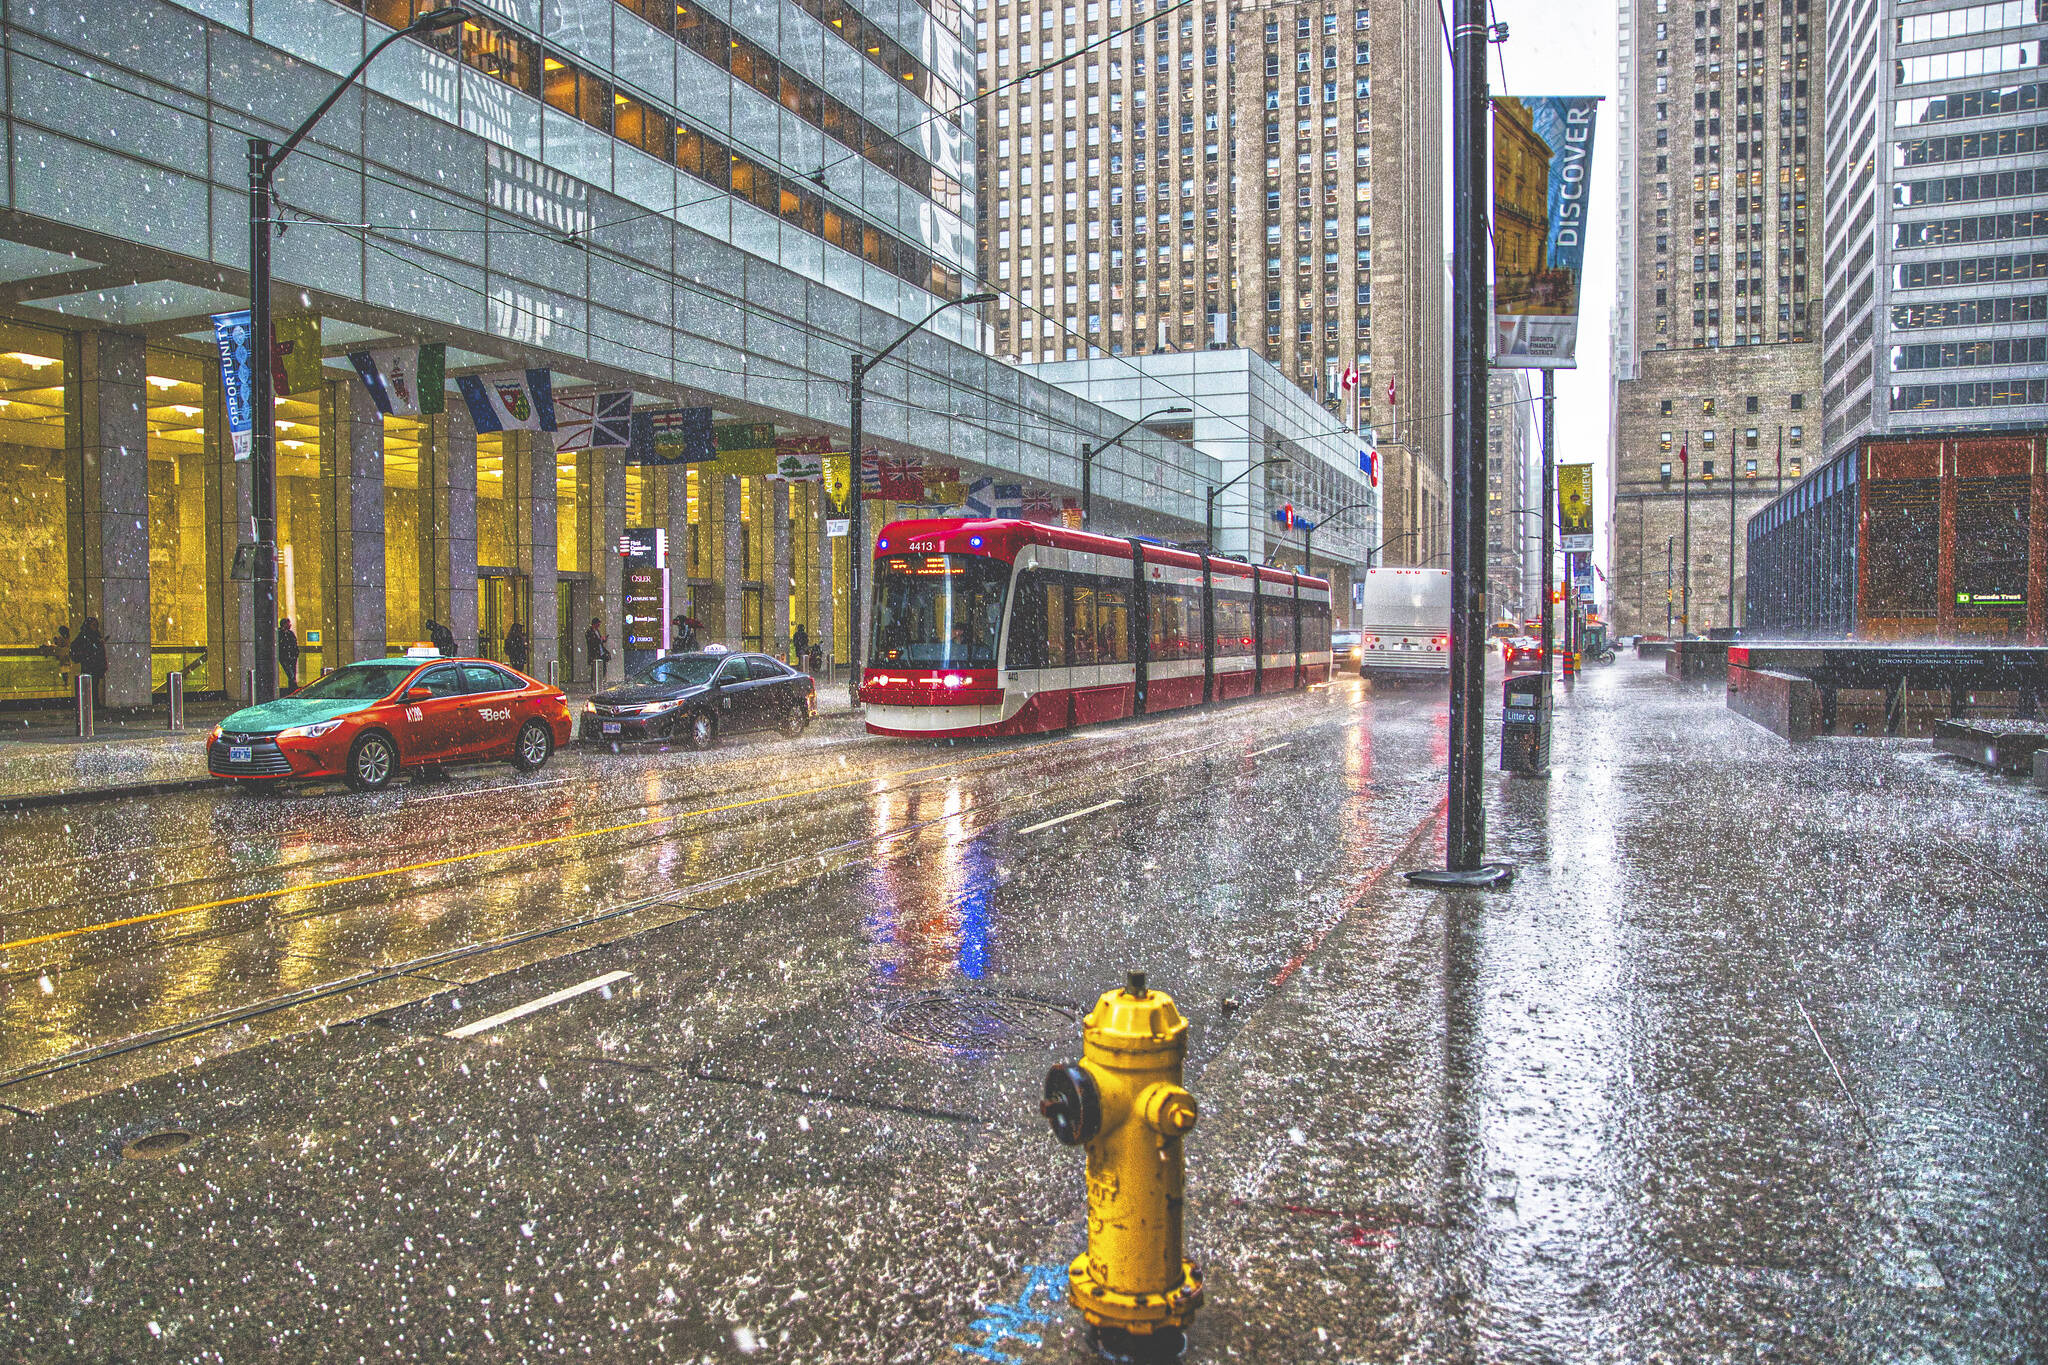 Toronto is expected to see singledigit temperatures this week